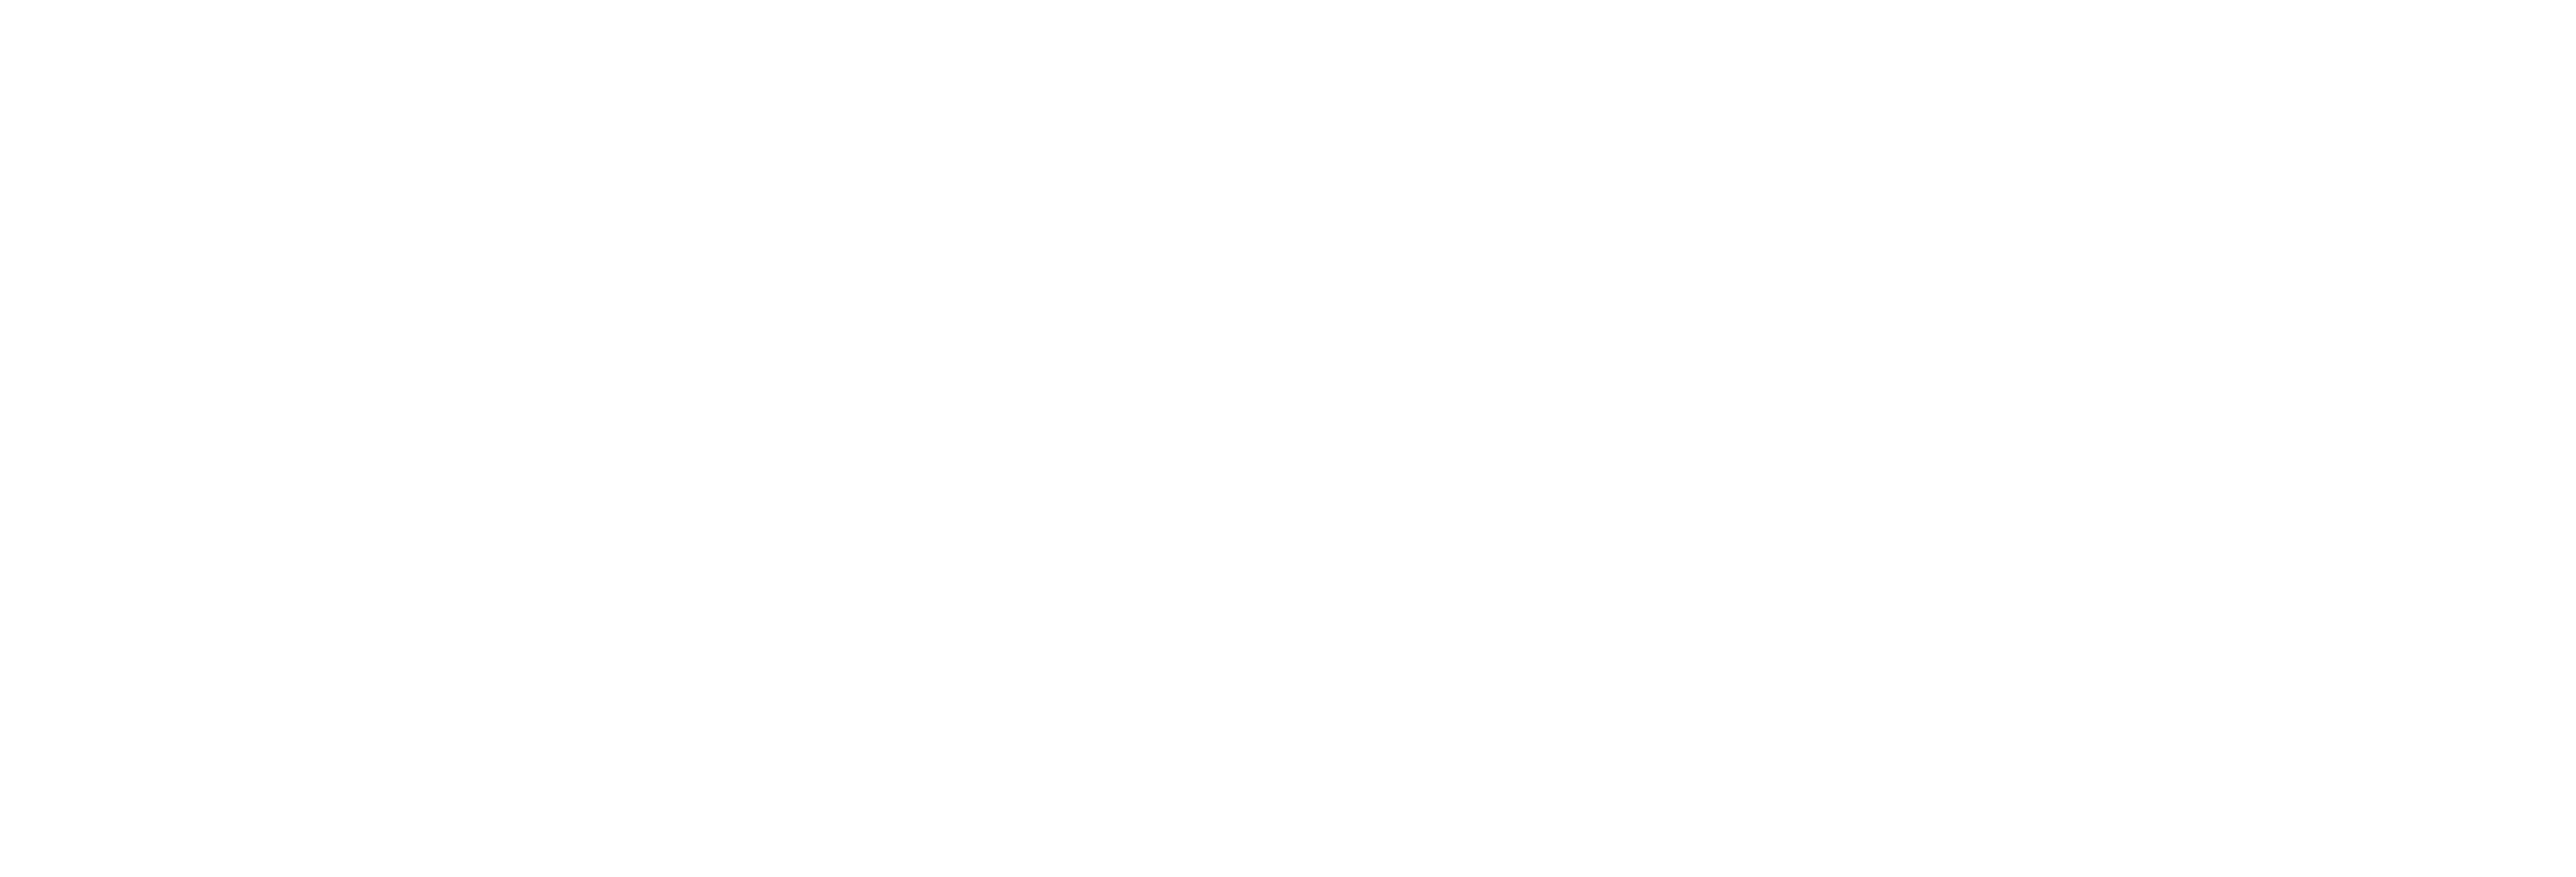 Cochrane Brasil